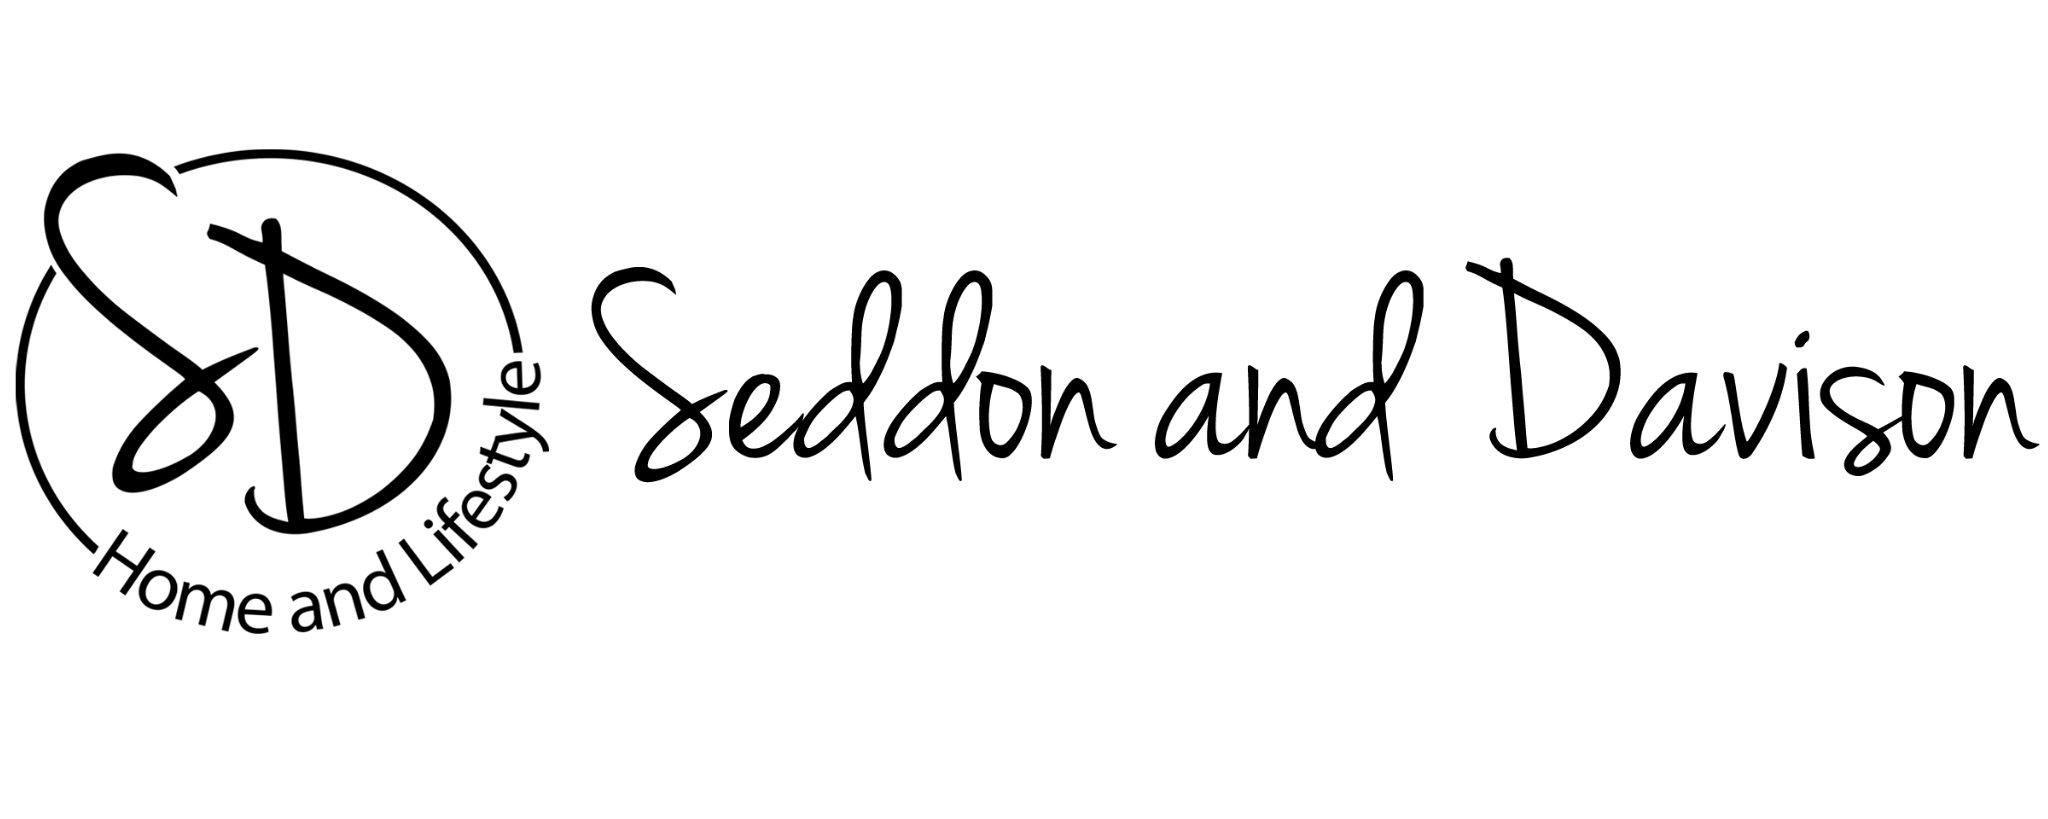 Seddon and Davison - Logo - Horizontal - Black